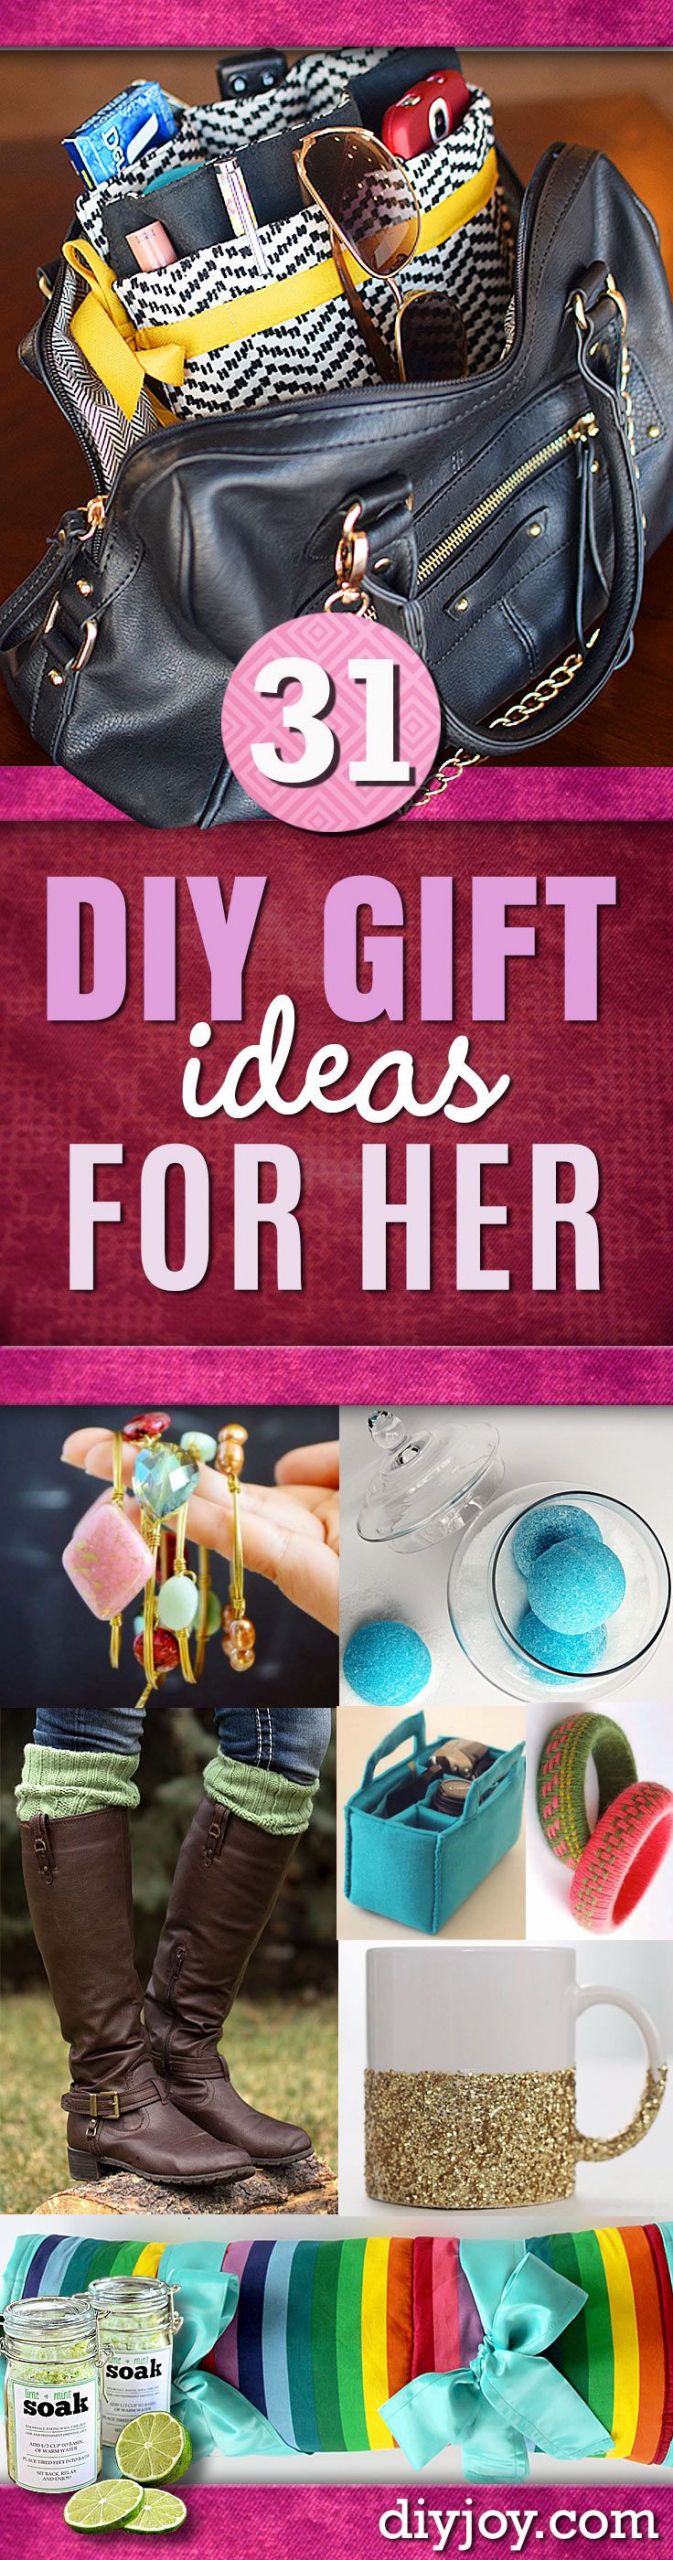 Handmade Gift Ideas For Girlfriend
 Super Special DIY Gift Ideas for Her DIY JOY